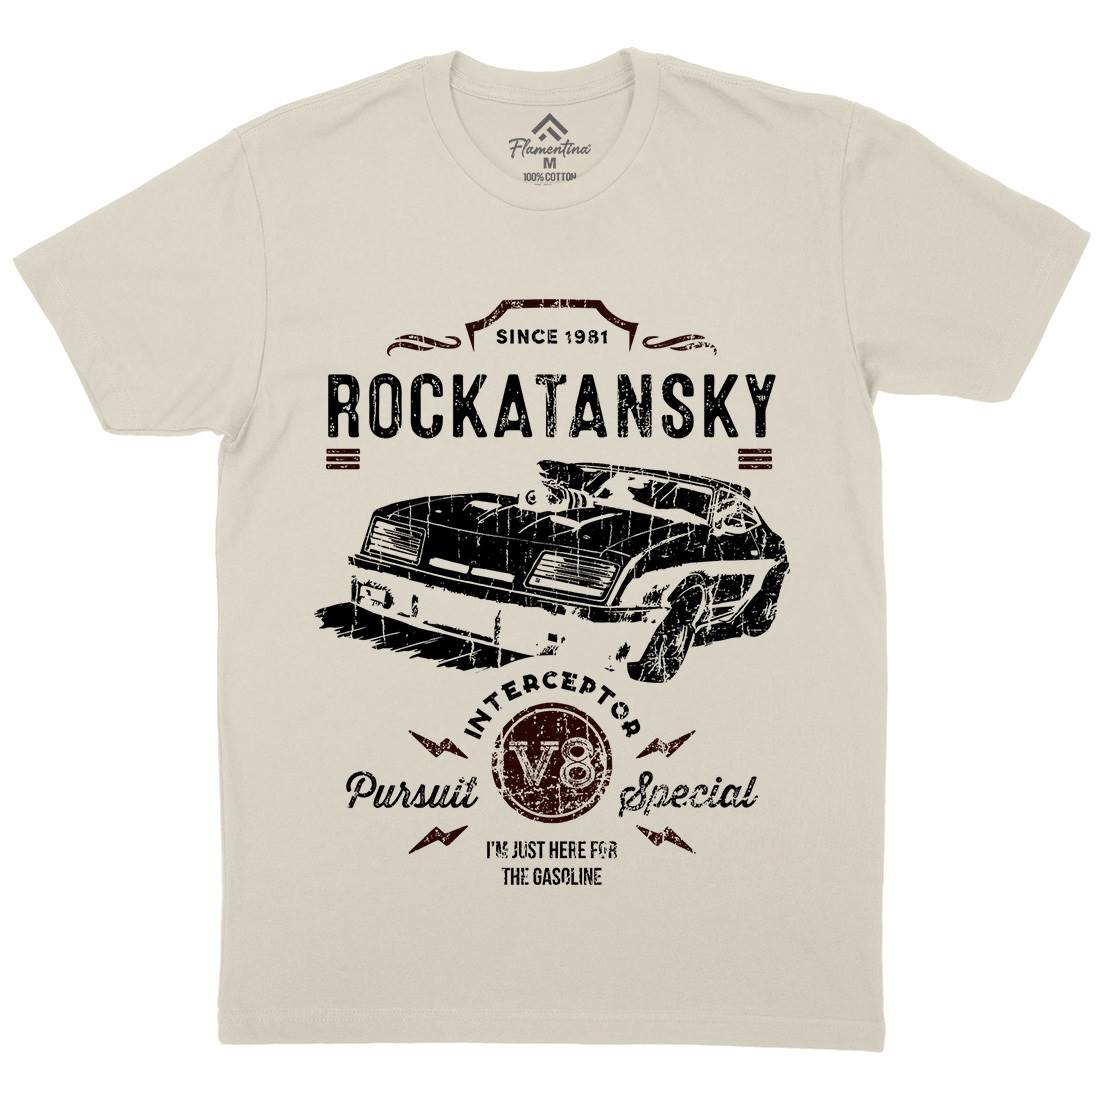 Rockatansky Mens Organic Crew Neck T-Shirt Cars D221